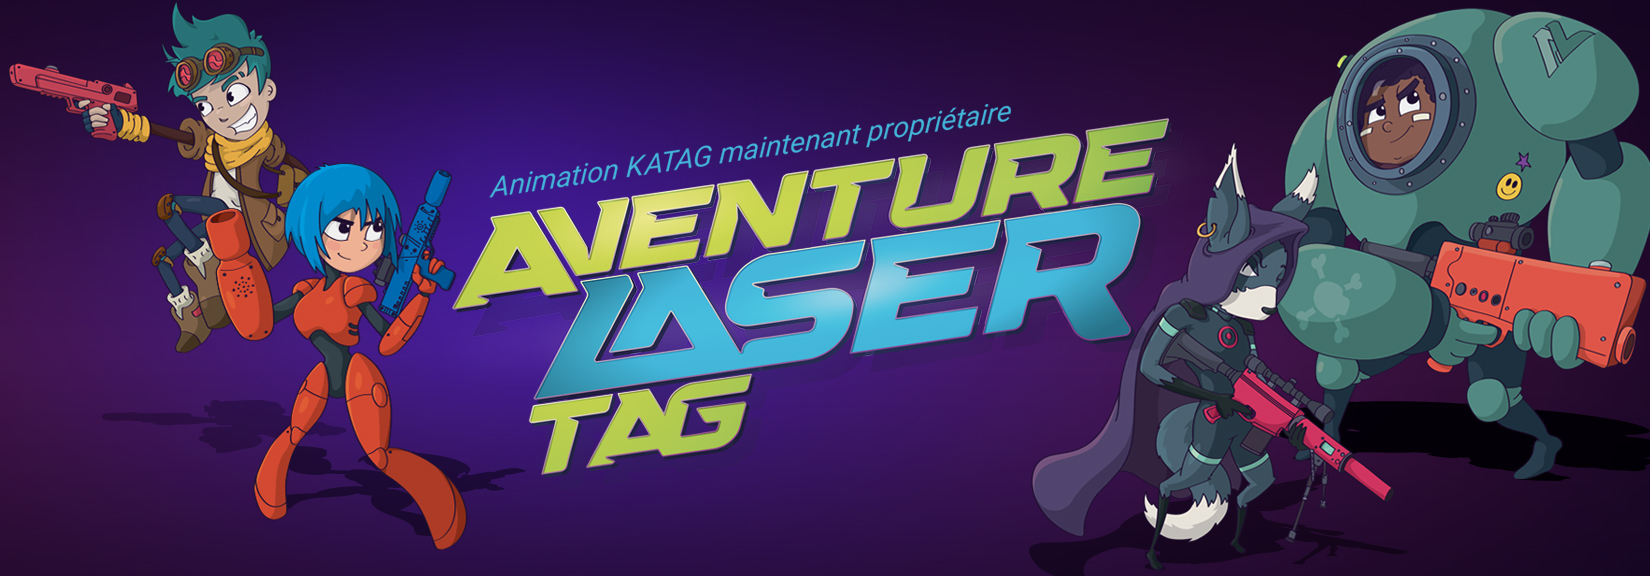 Inscrition_image Aventure Laser Tag | Katag